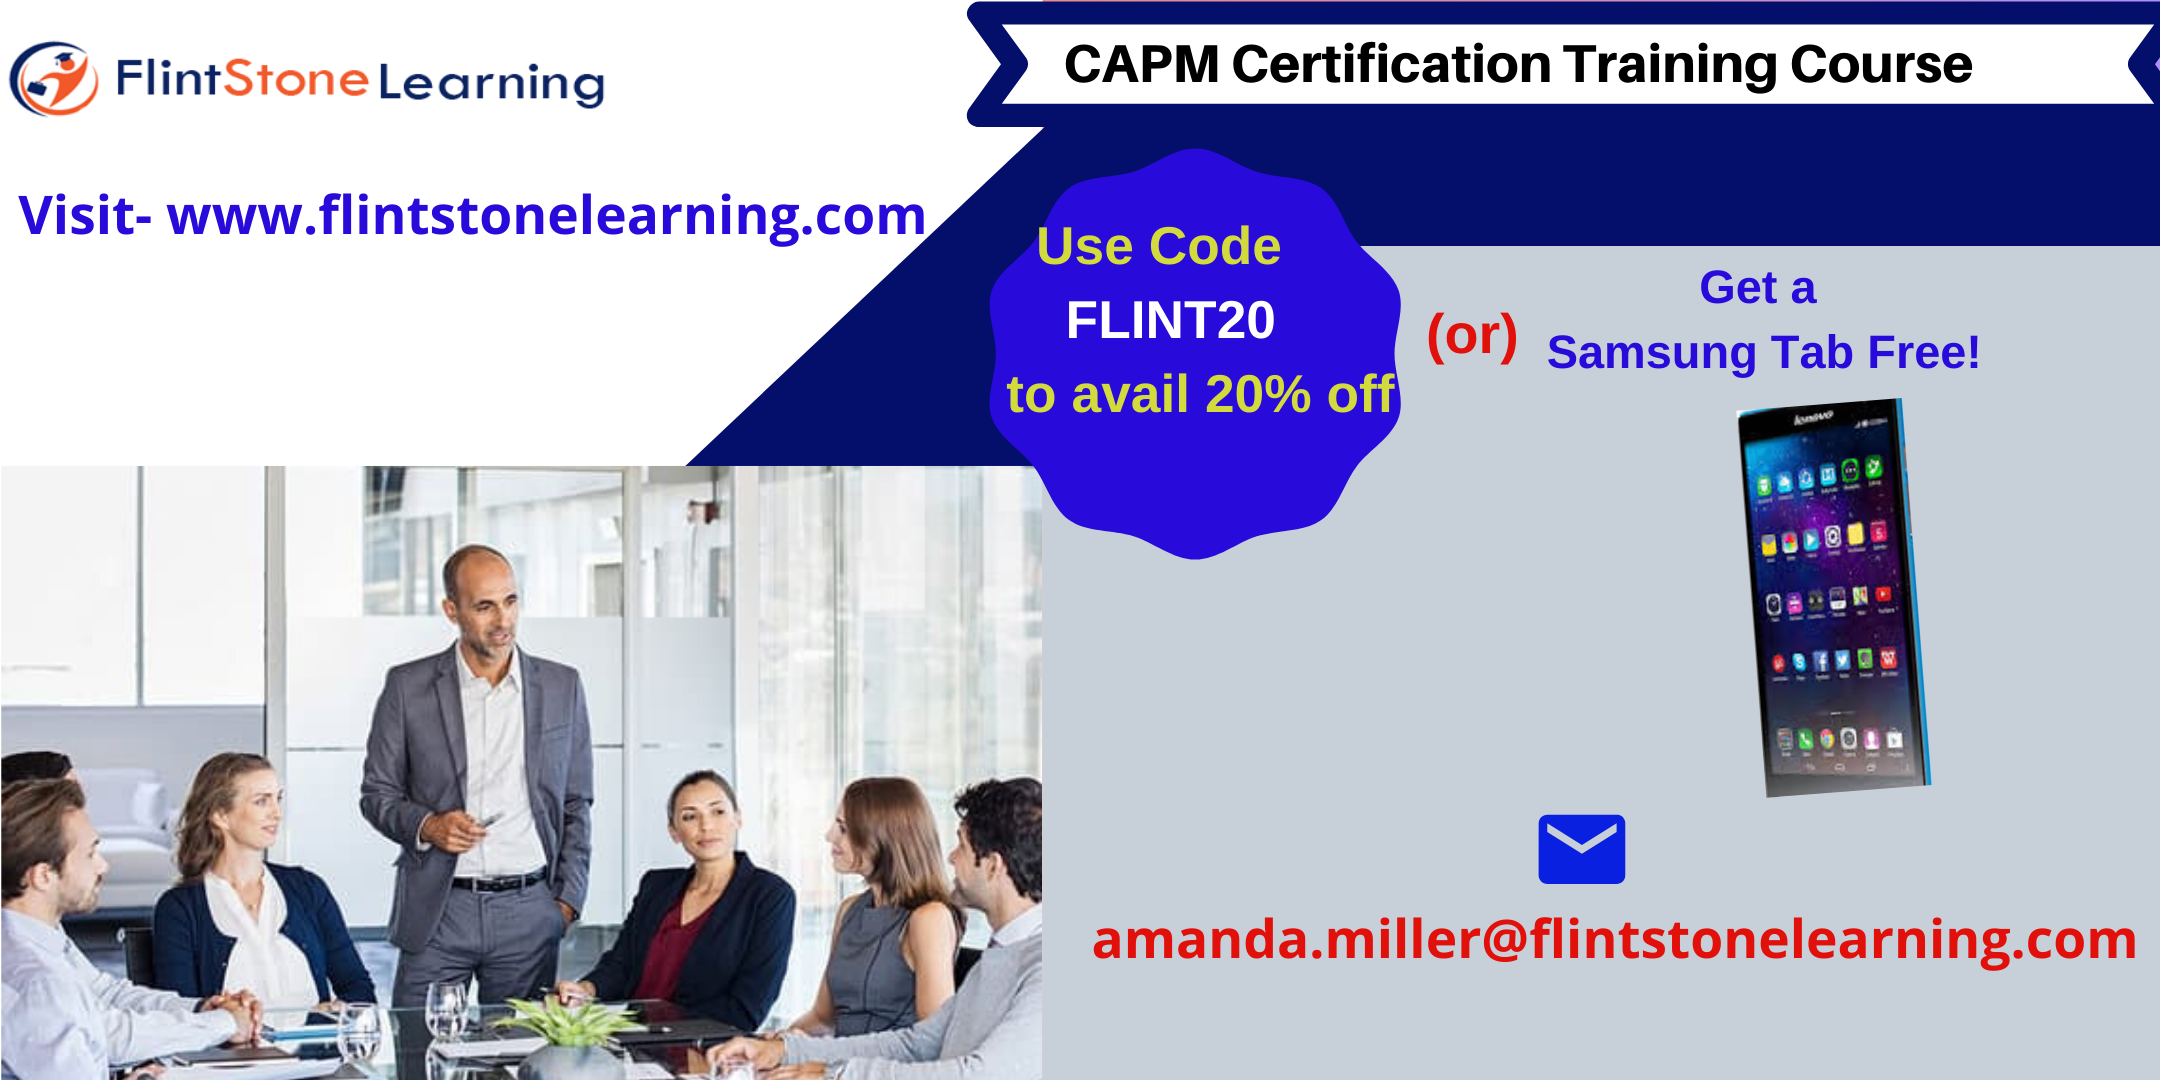 CAPM Certification Training Course in Pasadena, CA